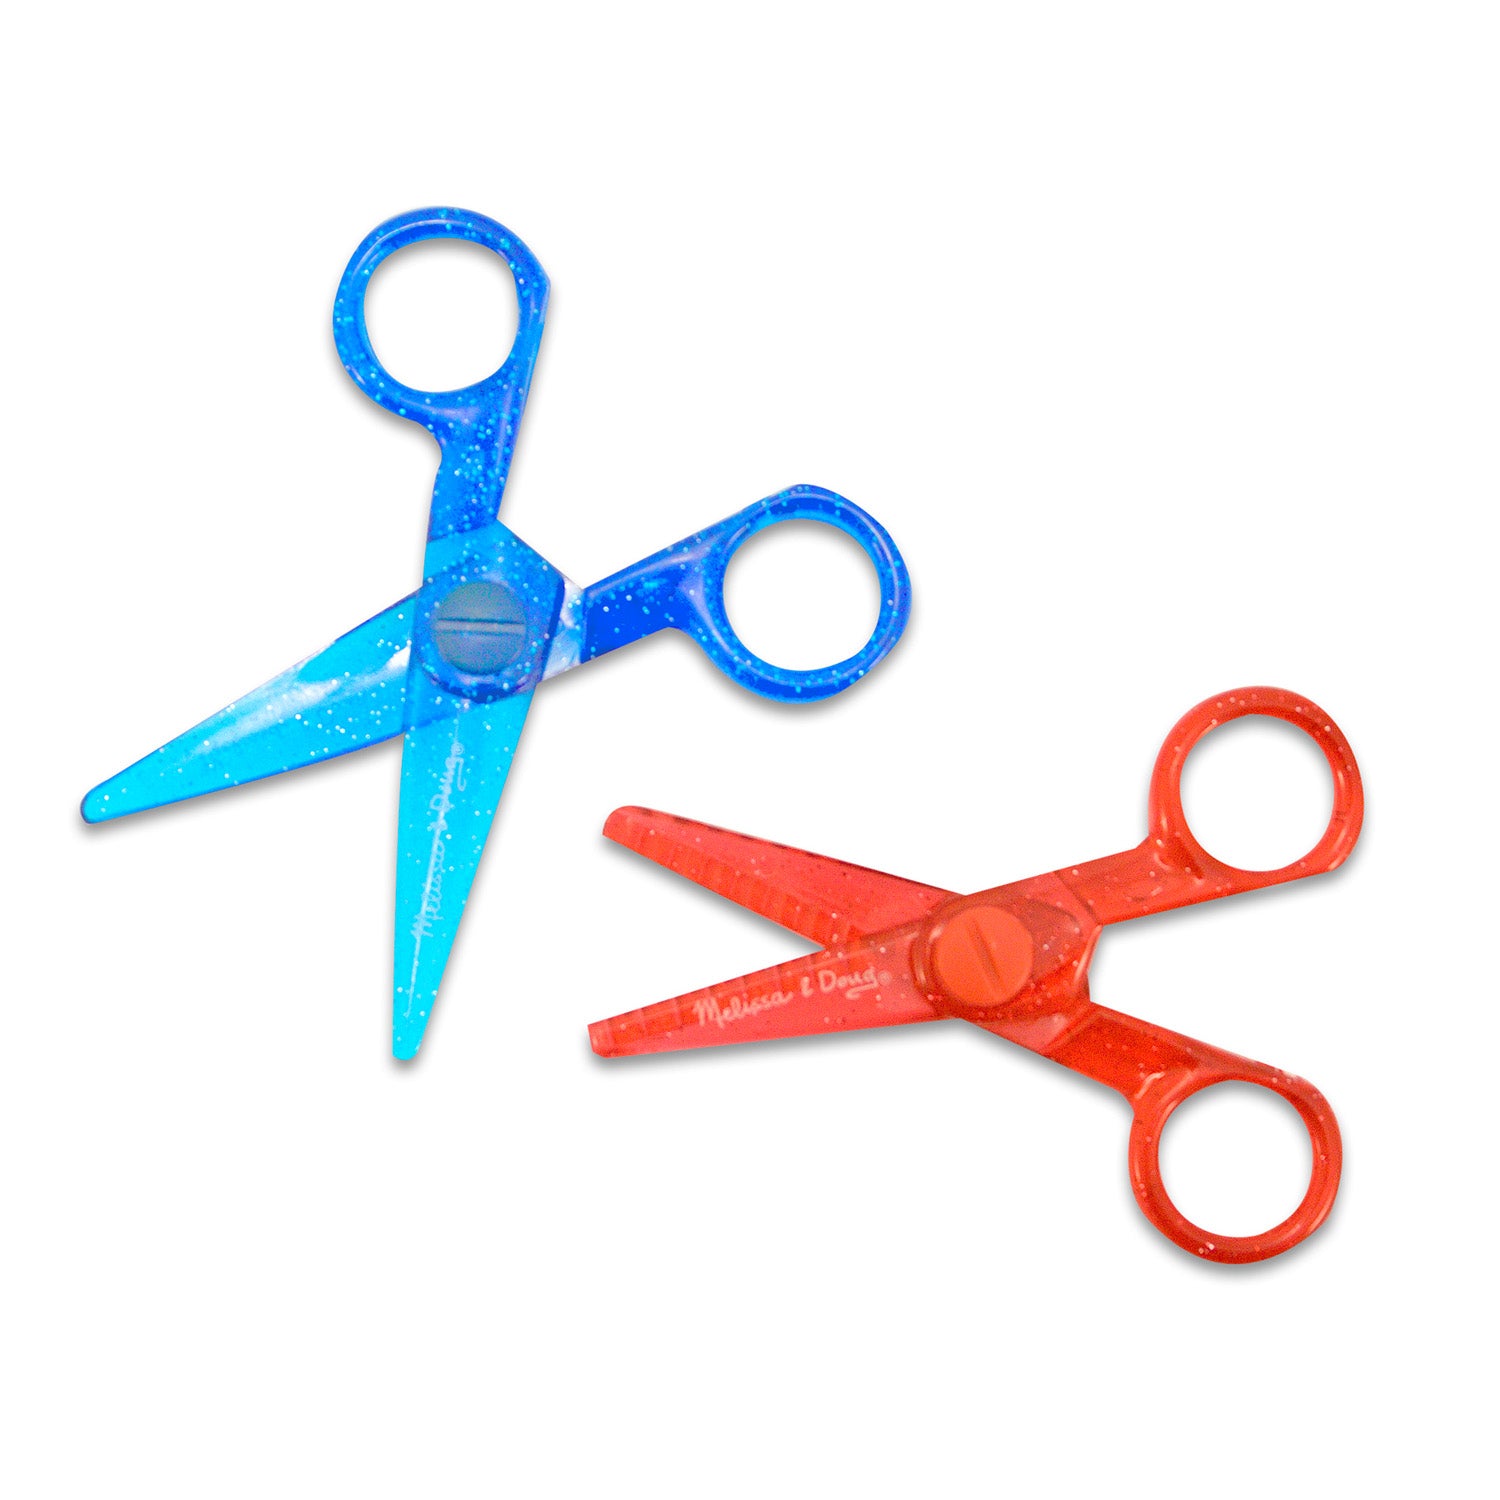 Melissa & Doug Child Safe Scissor Set 4224 – Good's Store Online